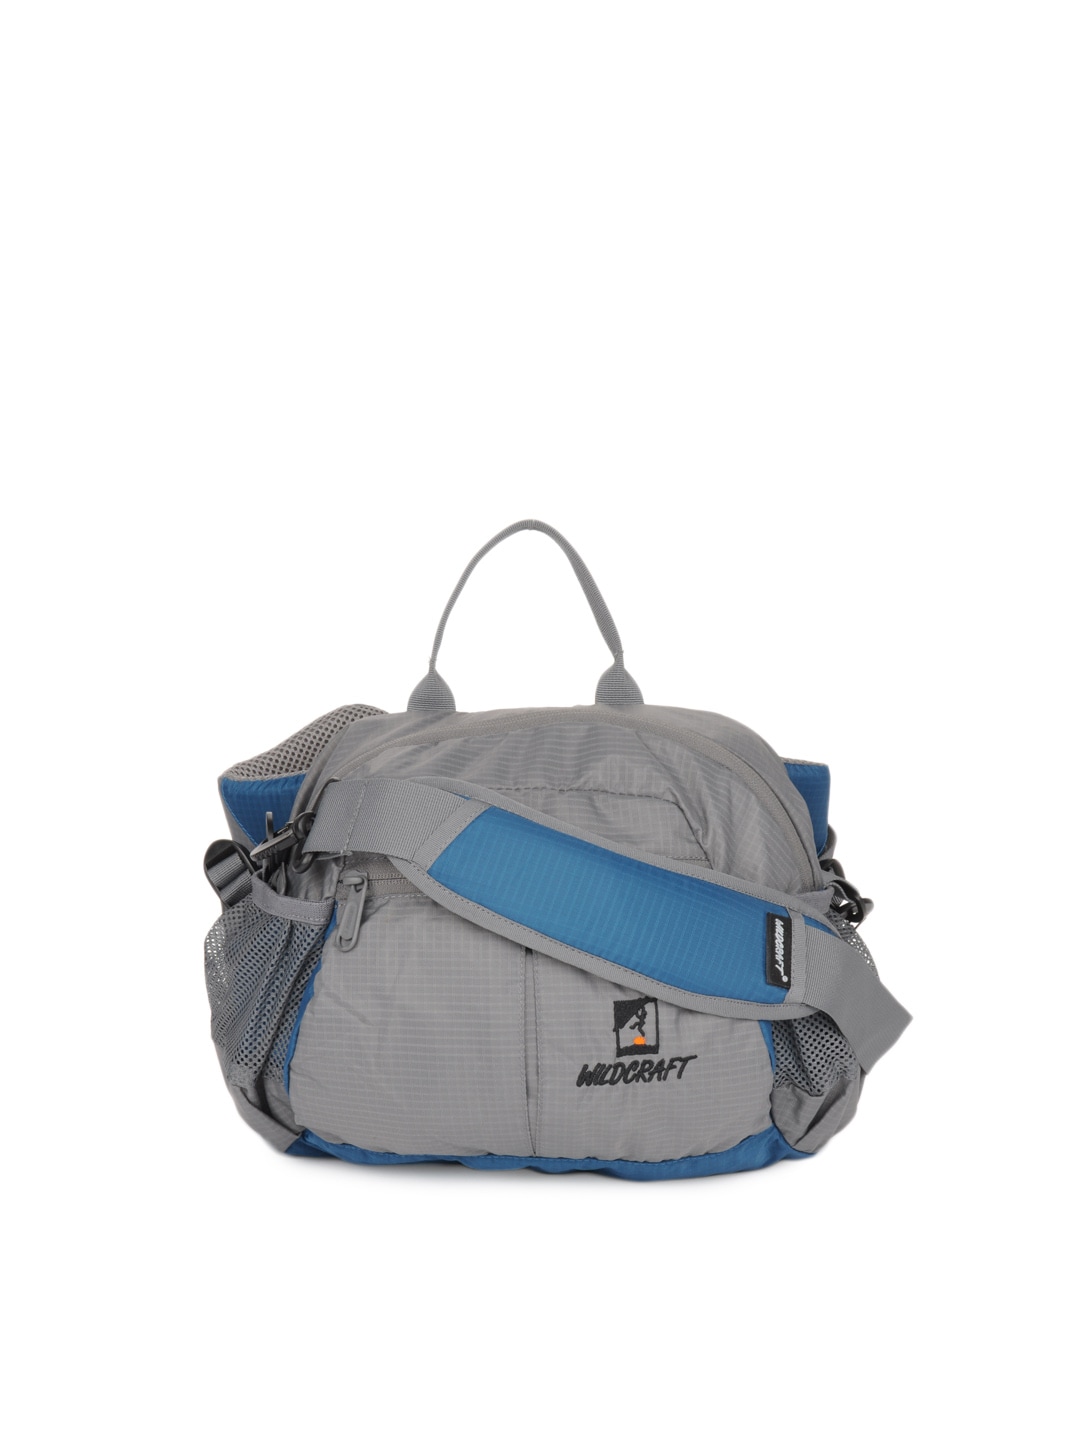 Wildcraft Unisex Blue & Grey Convertable Sling Bag